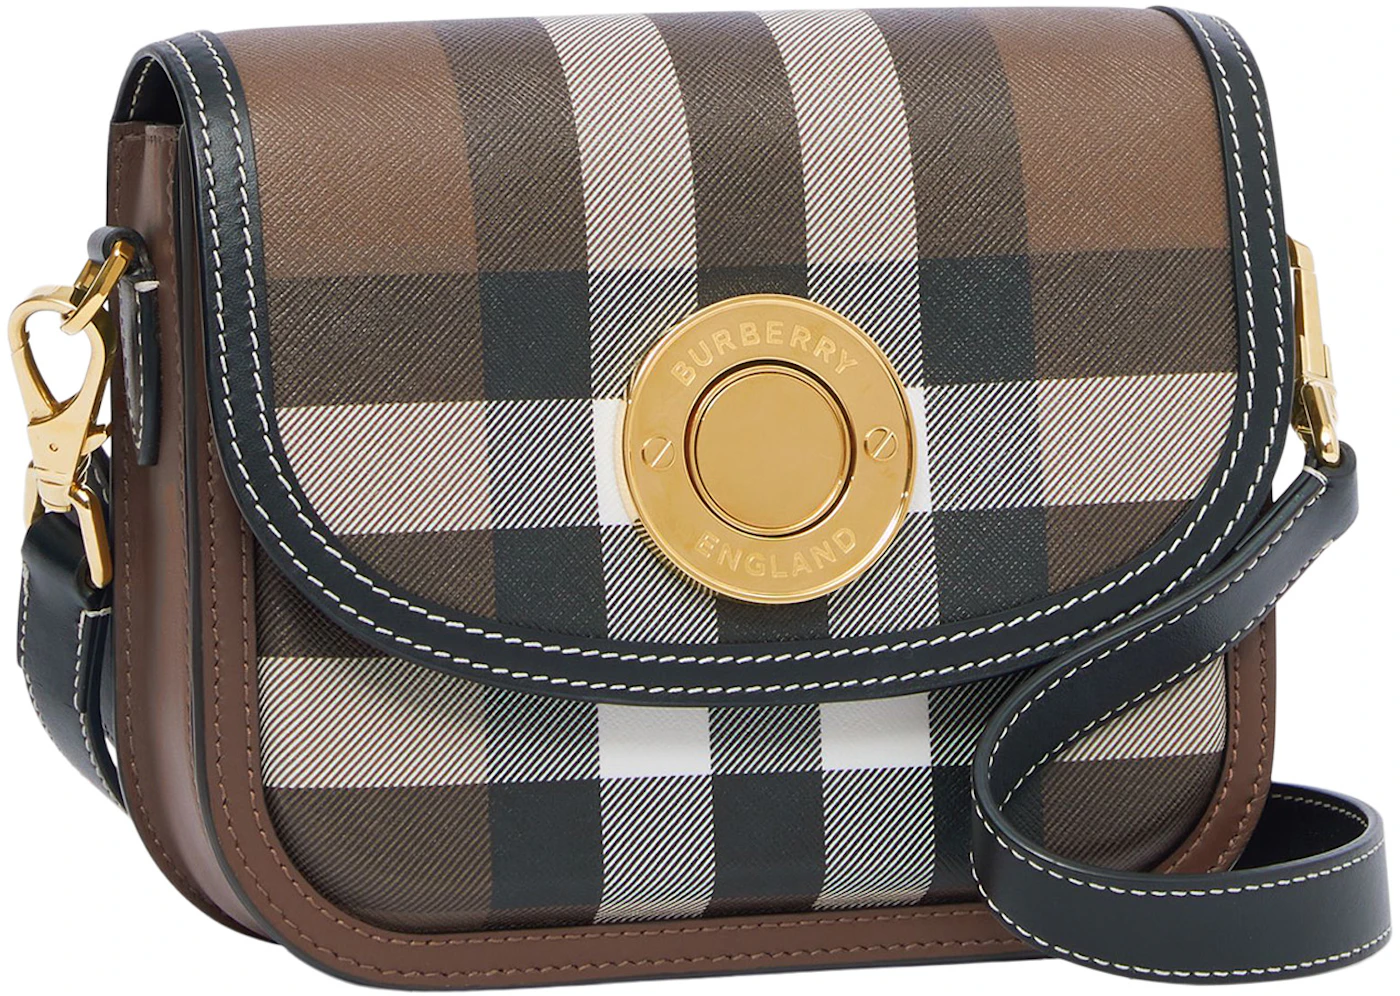 Burberry Leather Small Elizabeth Bag